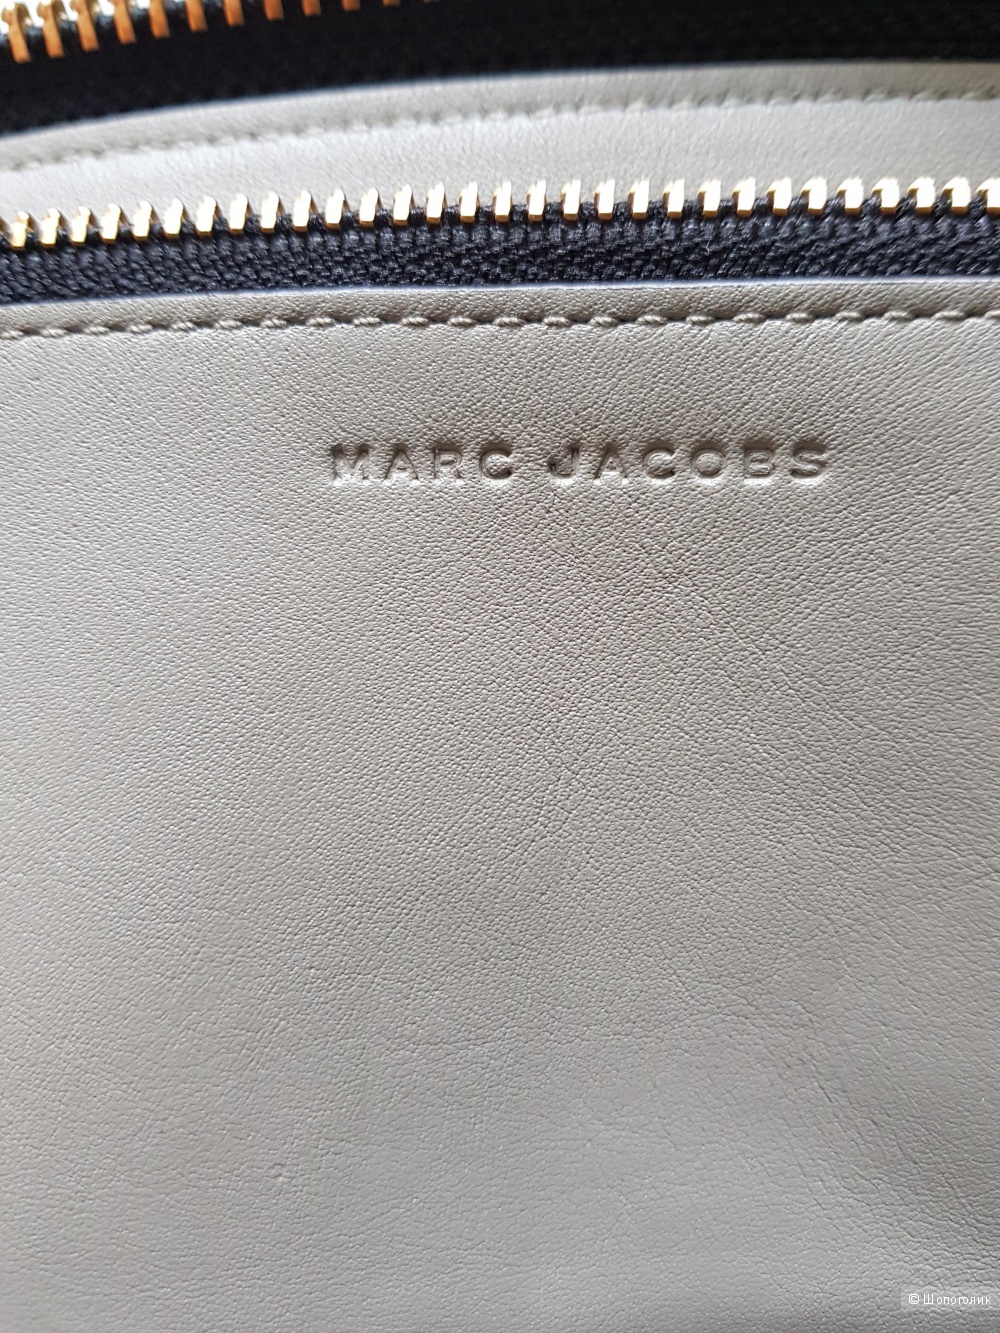 Marc Jacobs кошелек 1ая линия